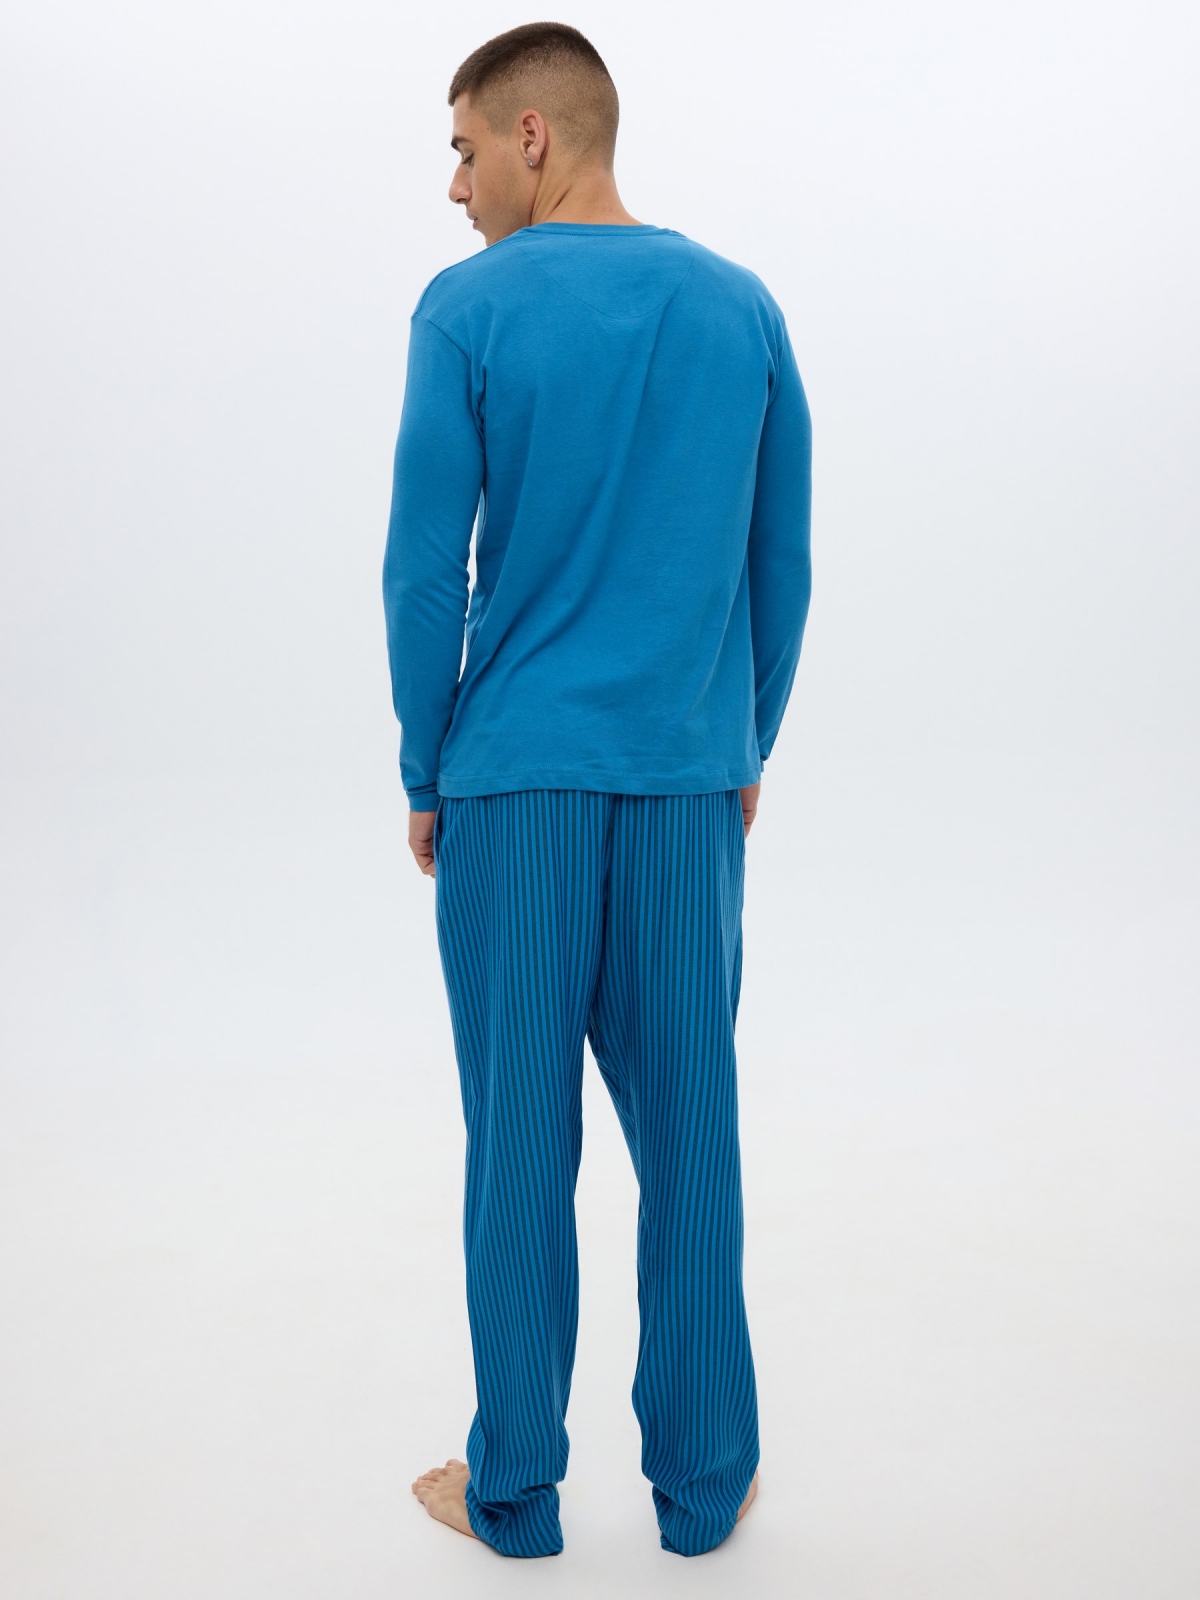 Pijama azul pantalón rayas azul vista media trasera